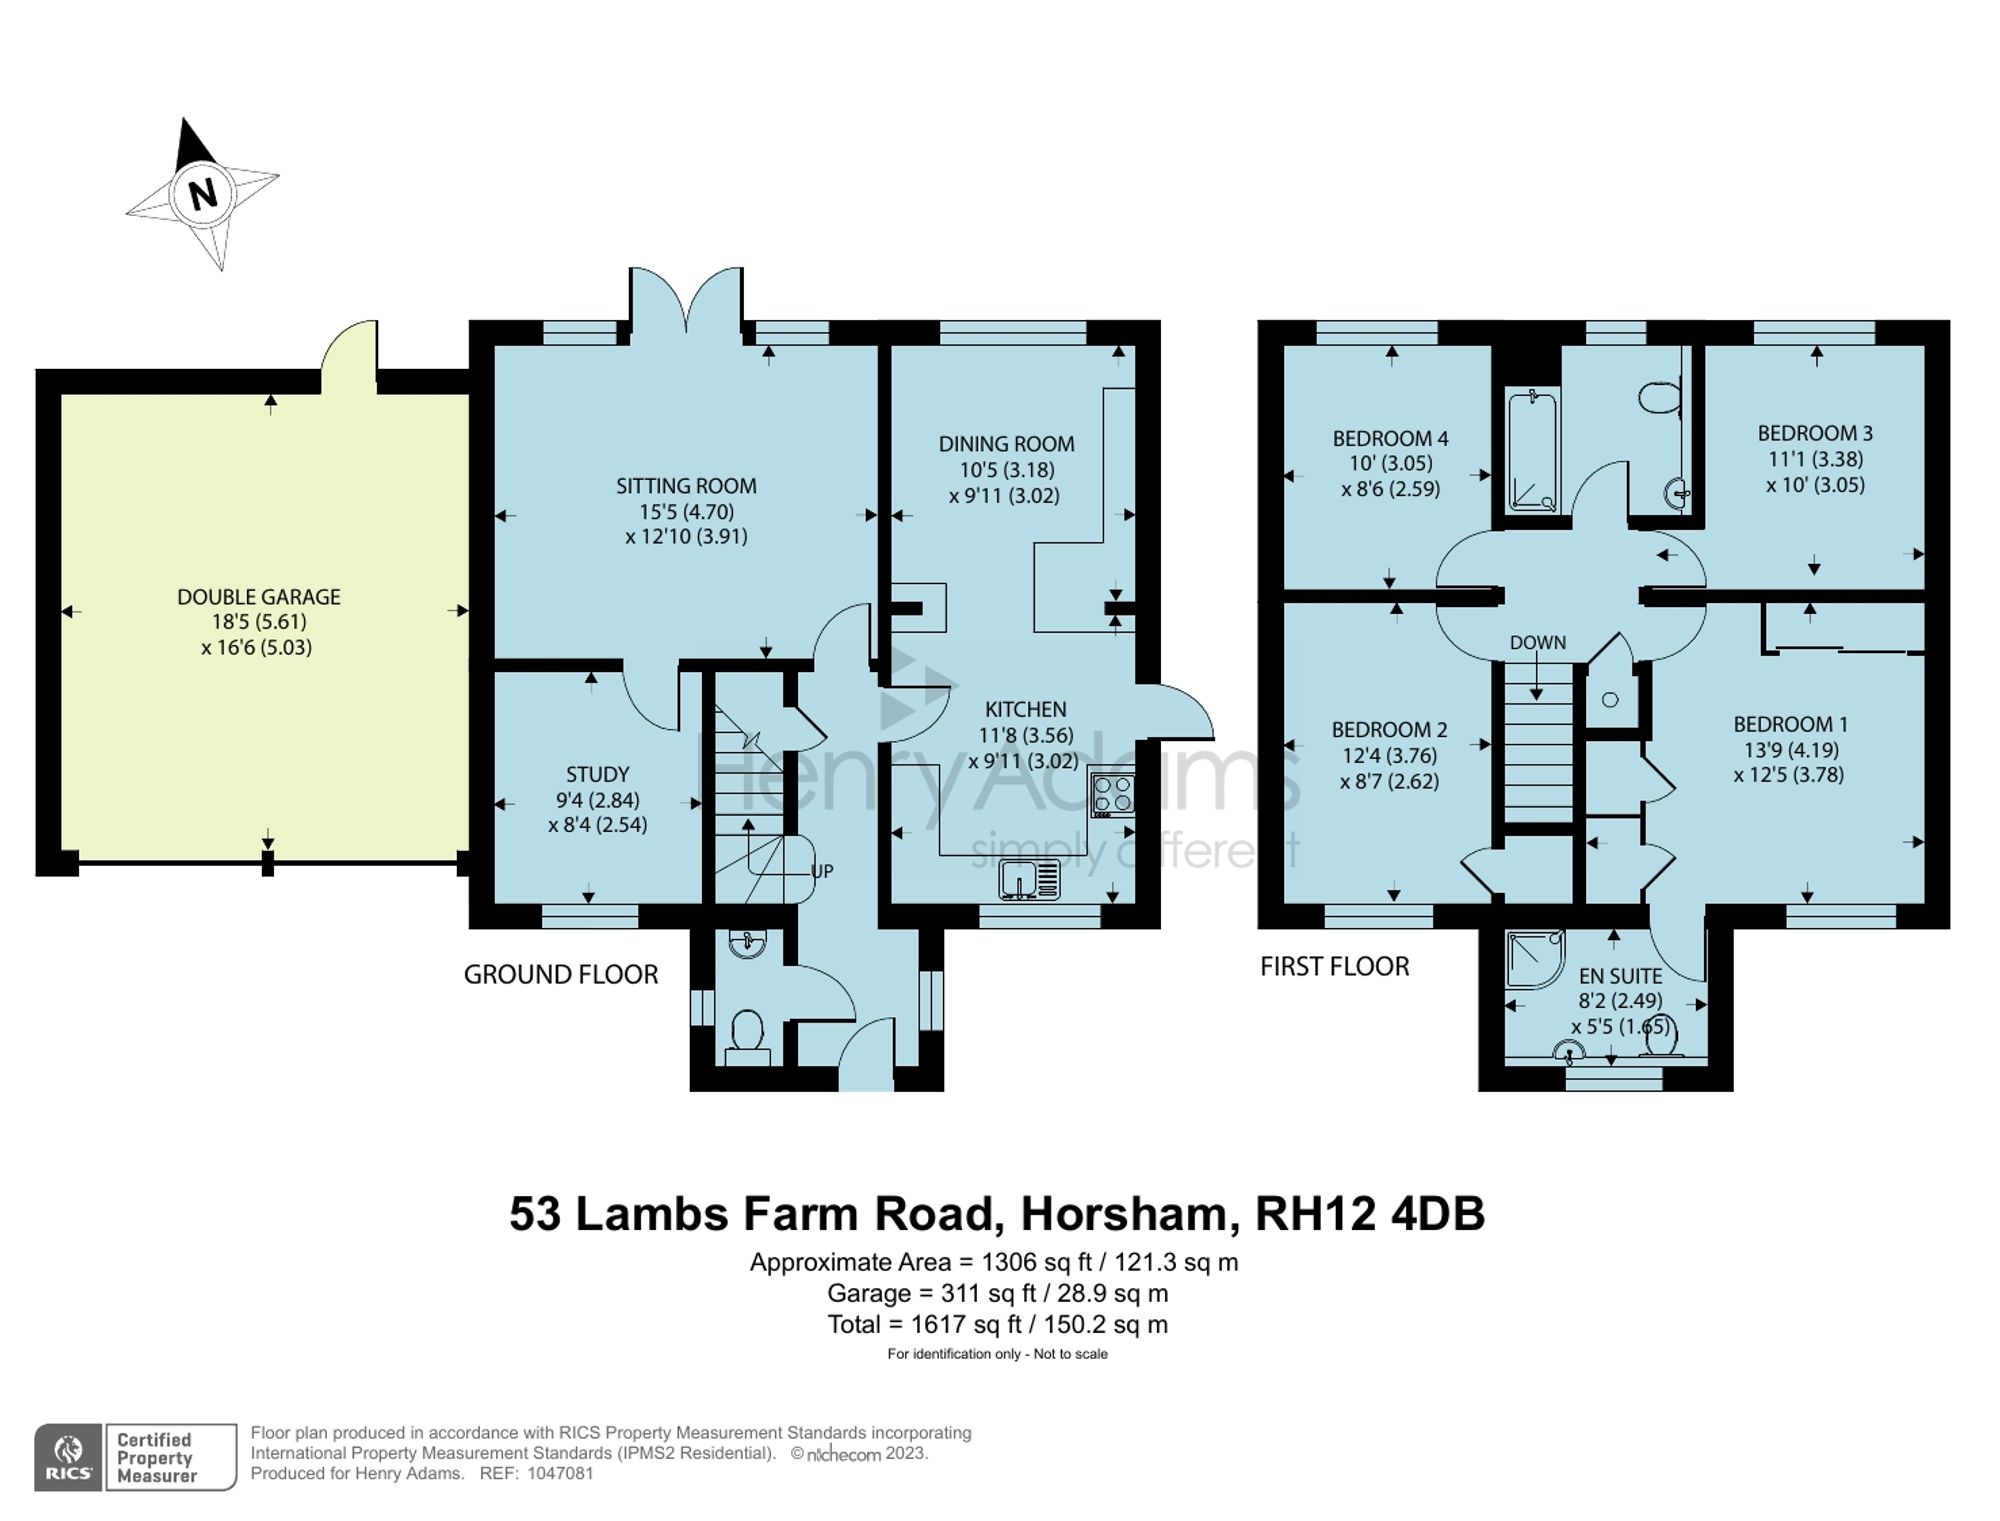 Lambs Farm Road, Horsham, RH12 floorplans